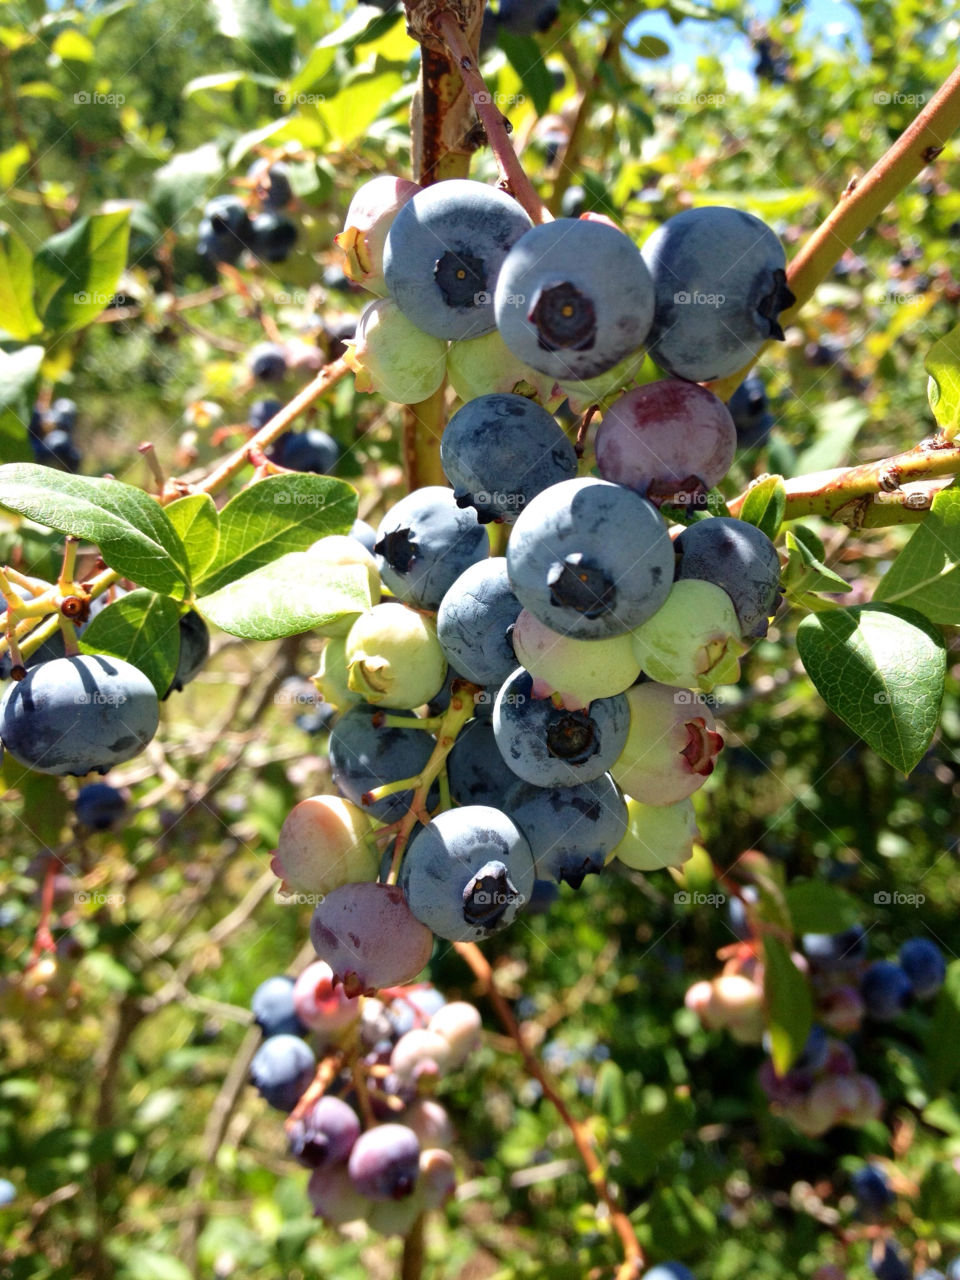 bush blueberries blueberry by bigouppets